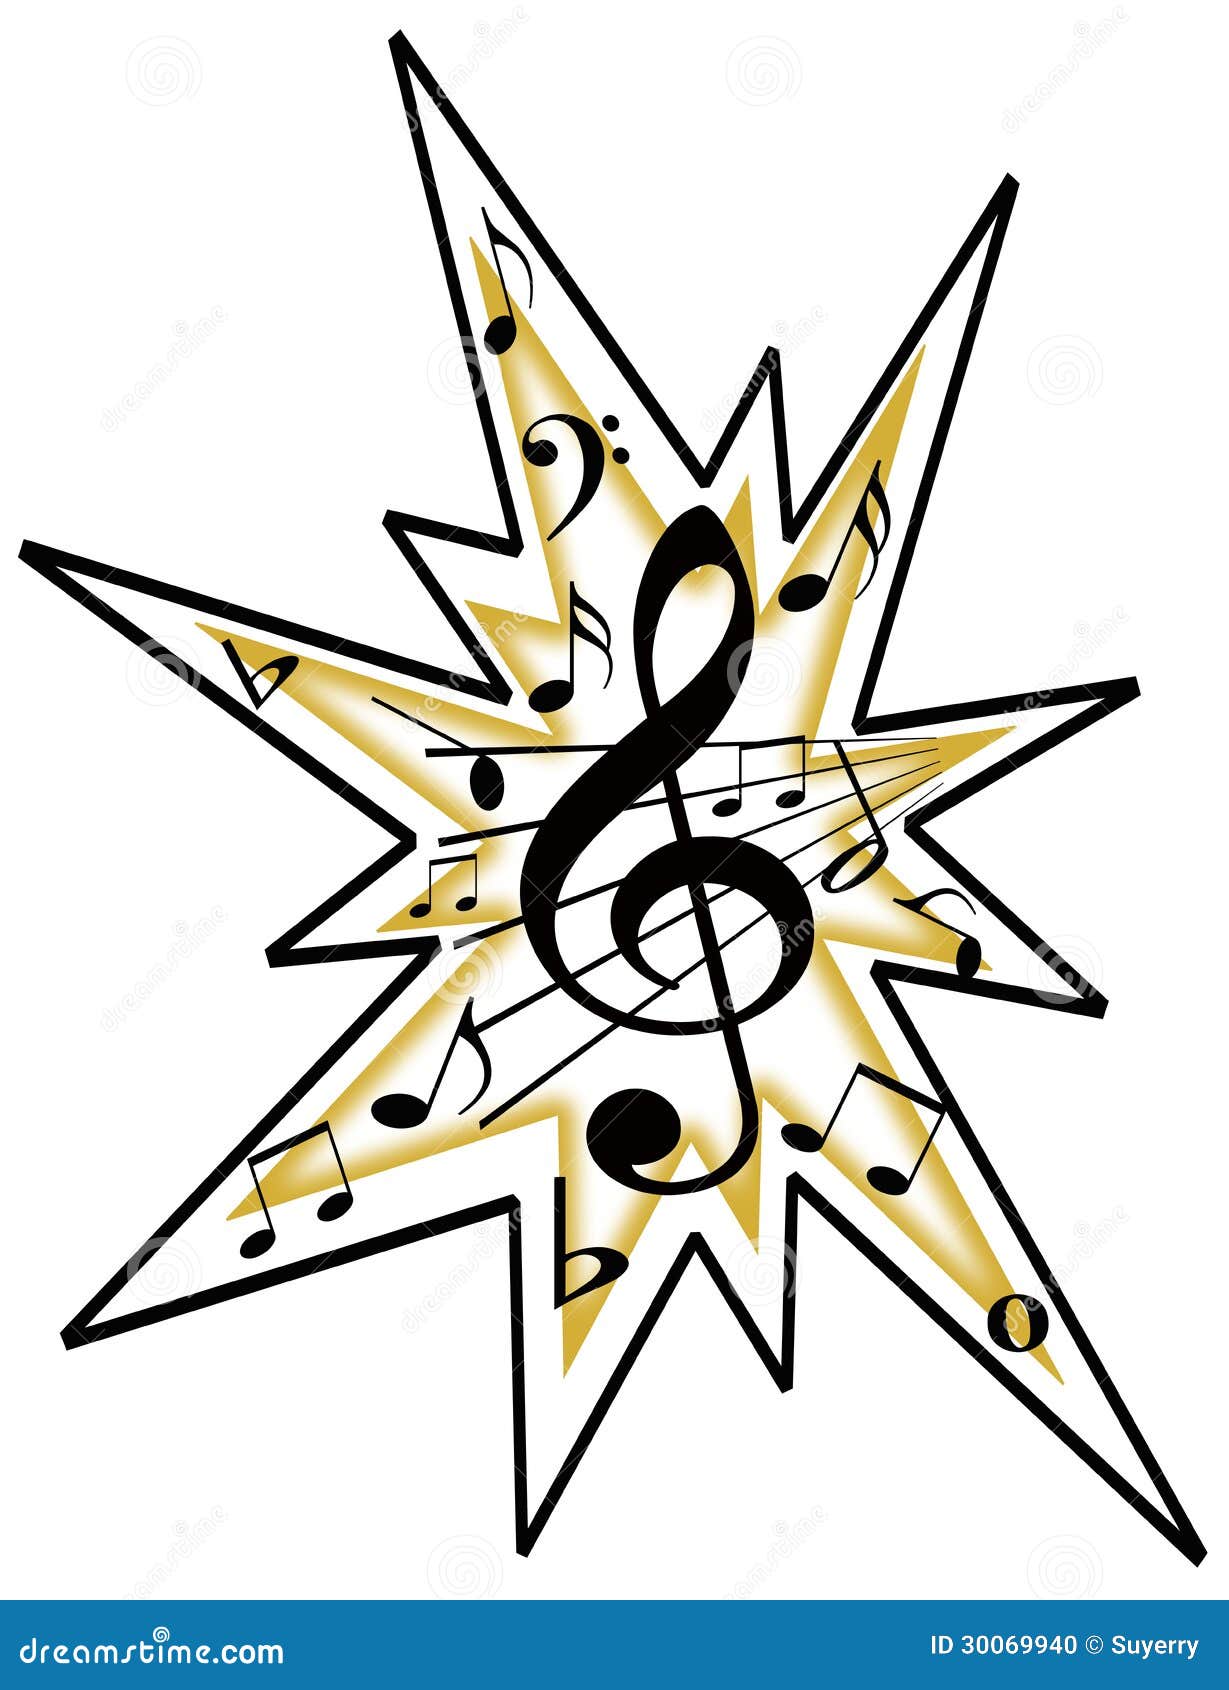 Musical Illustration Vector Hd PNG Images, Music Logo Icon Vector  Illustration Design, Vector, Mobile, Modern PNG Image For Free Download